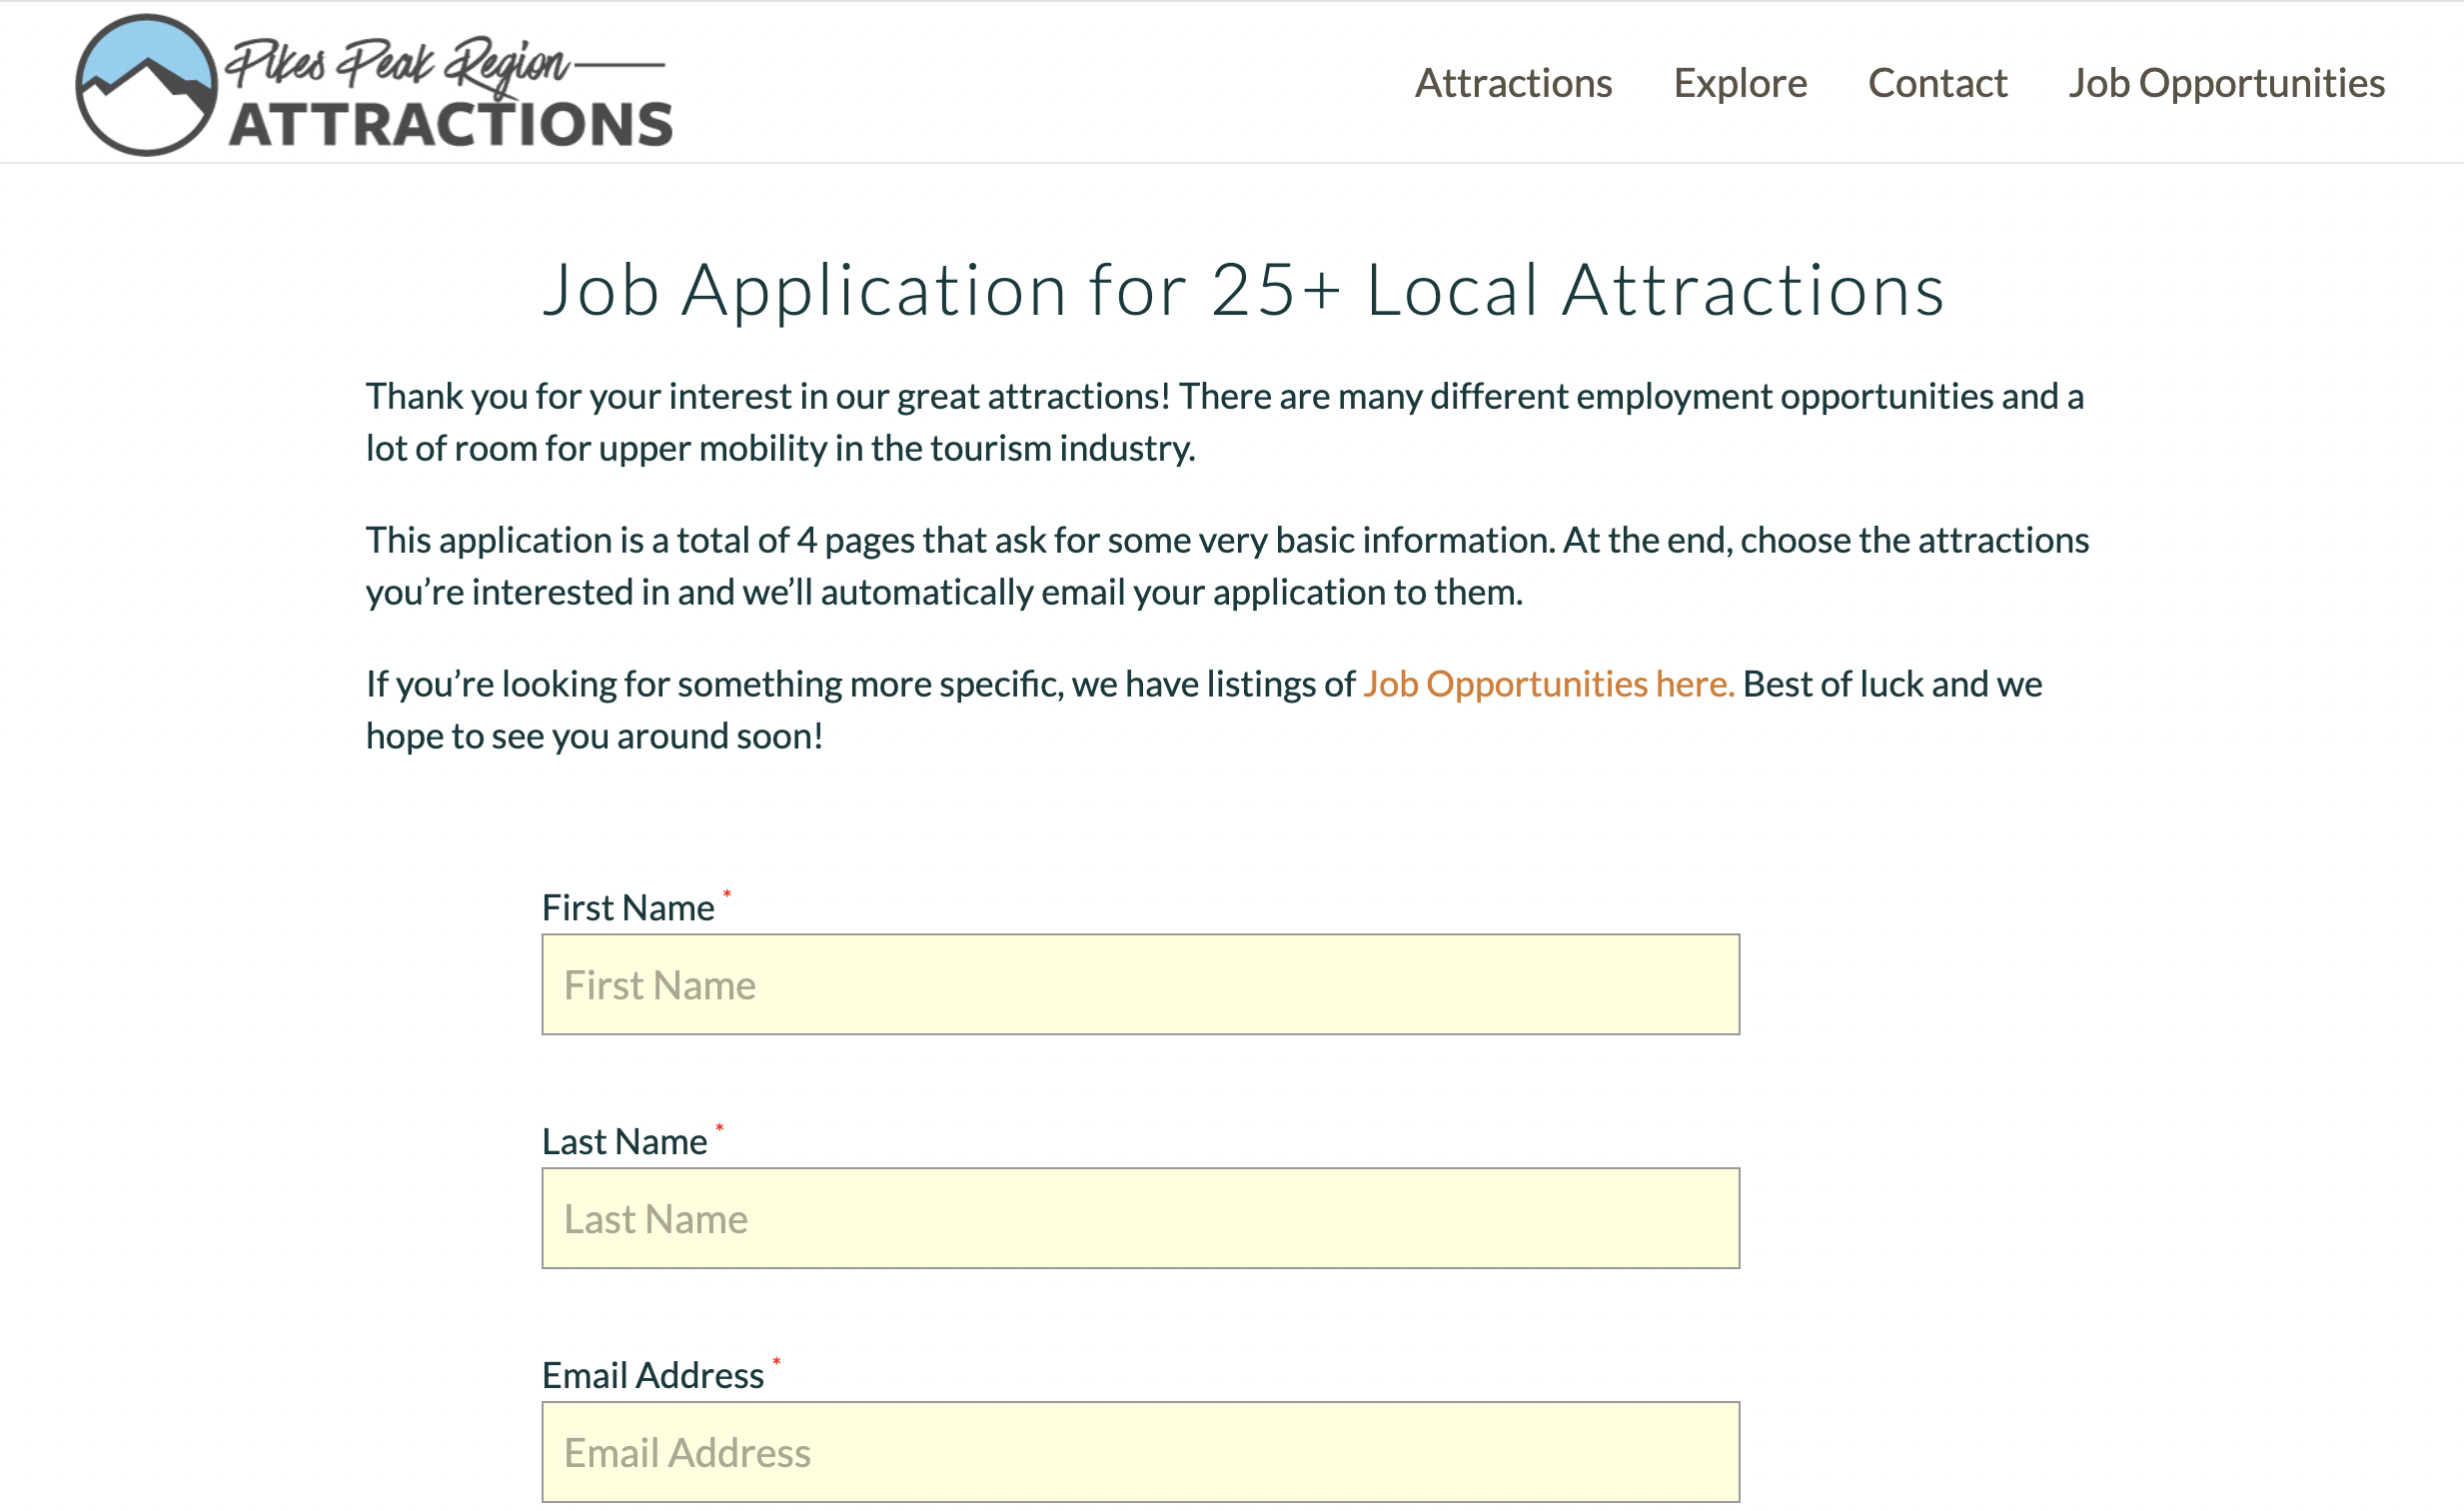 pikes peak region attractions employment portal